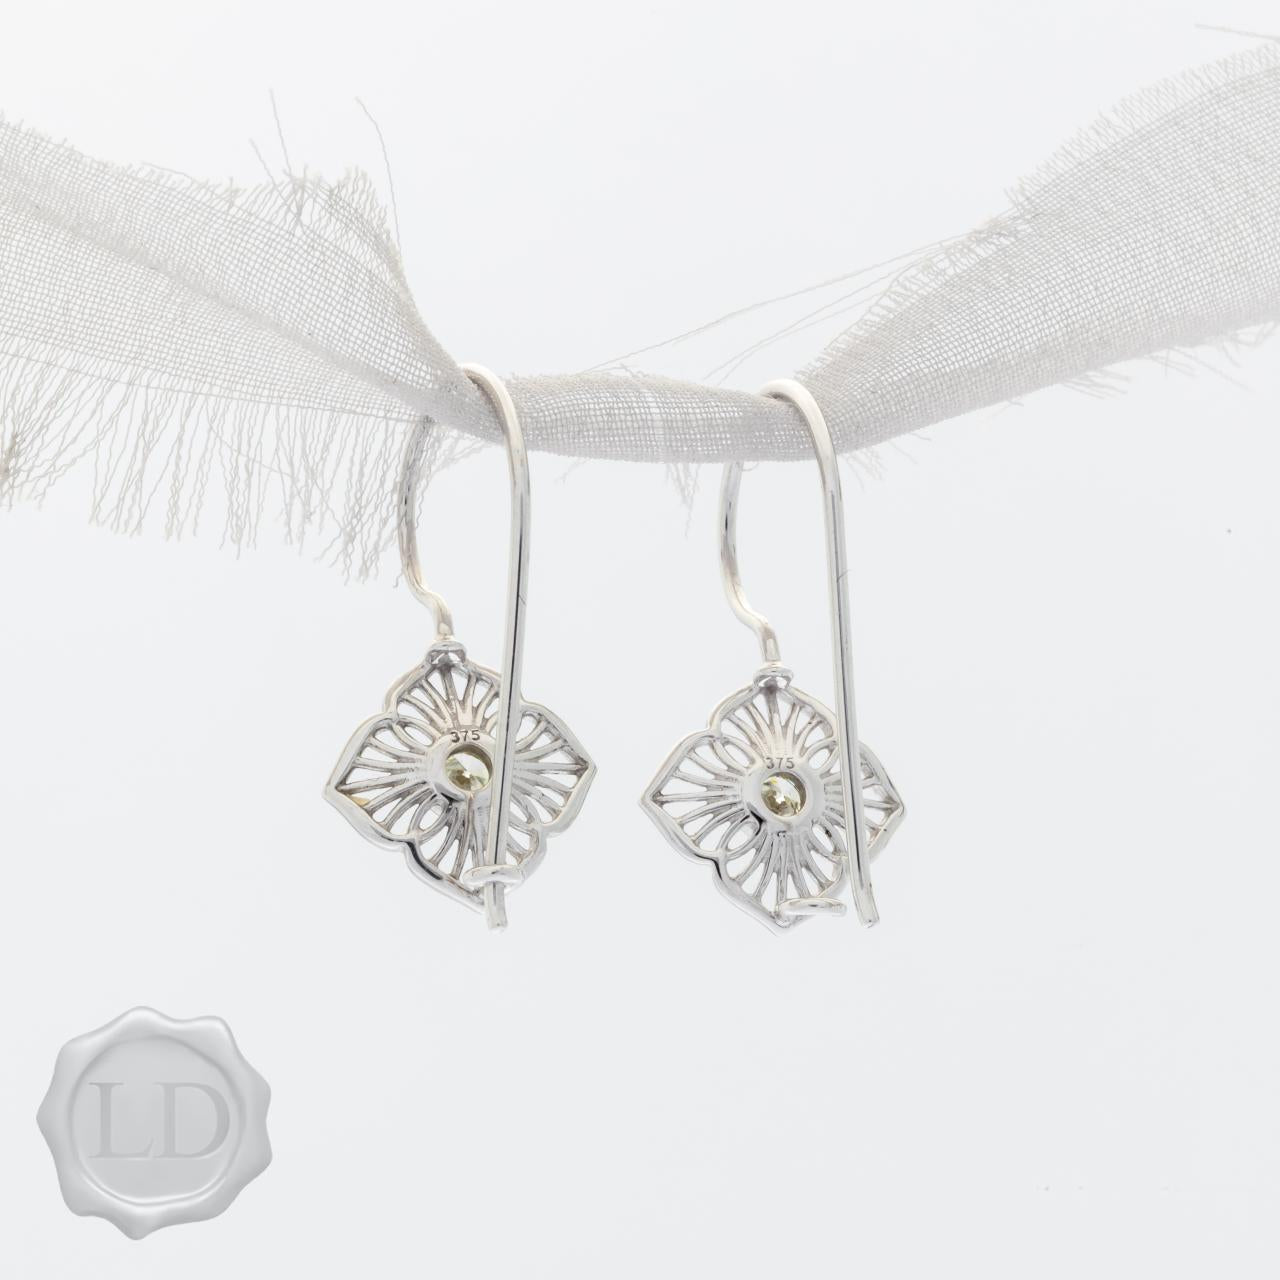 Lily diamond drop earrings, white gold